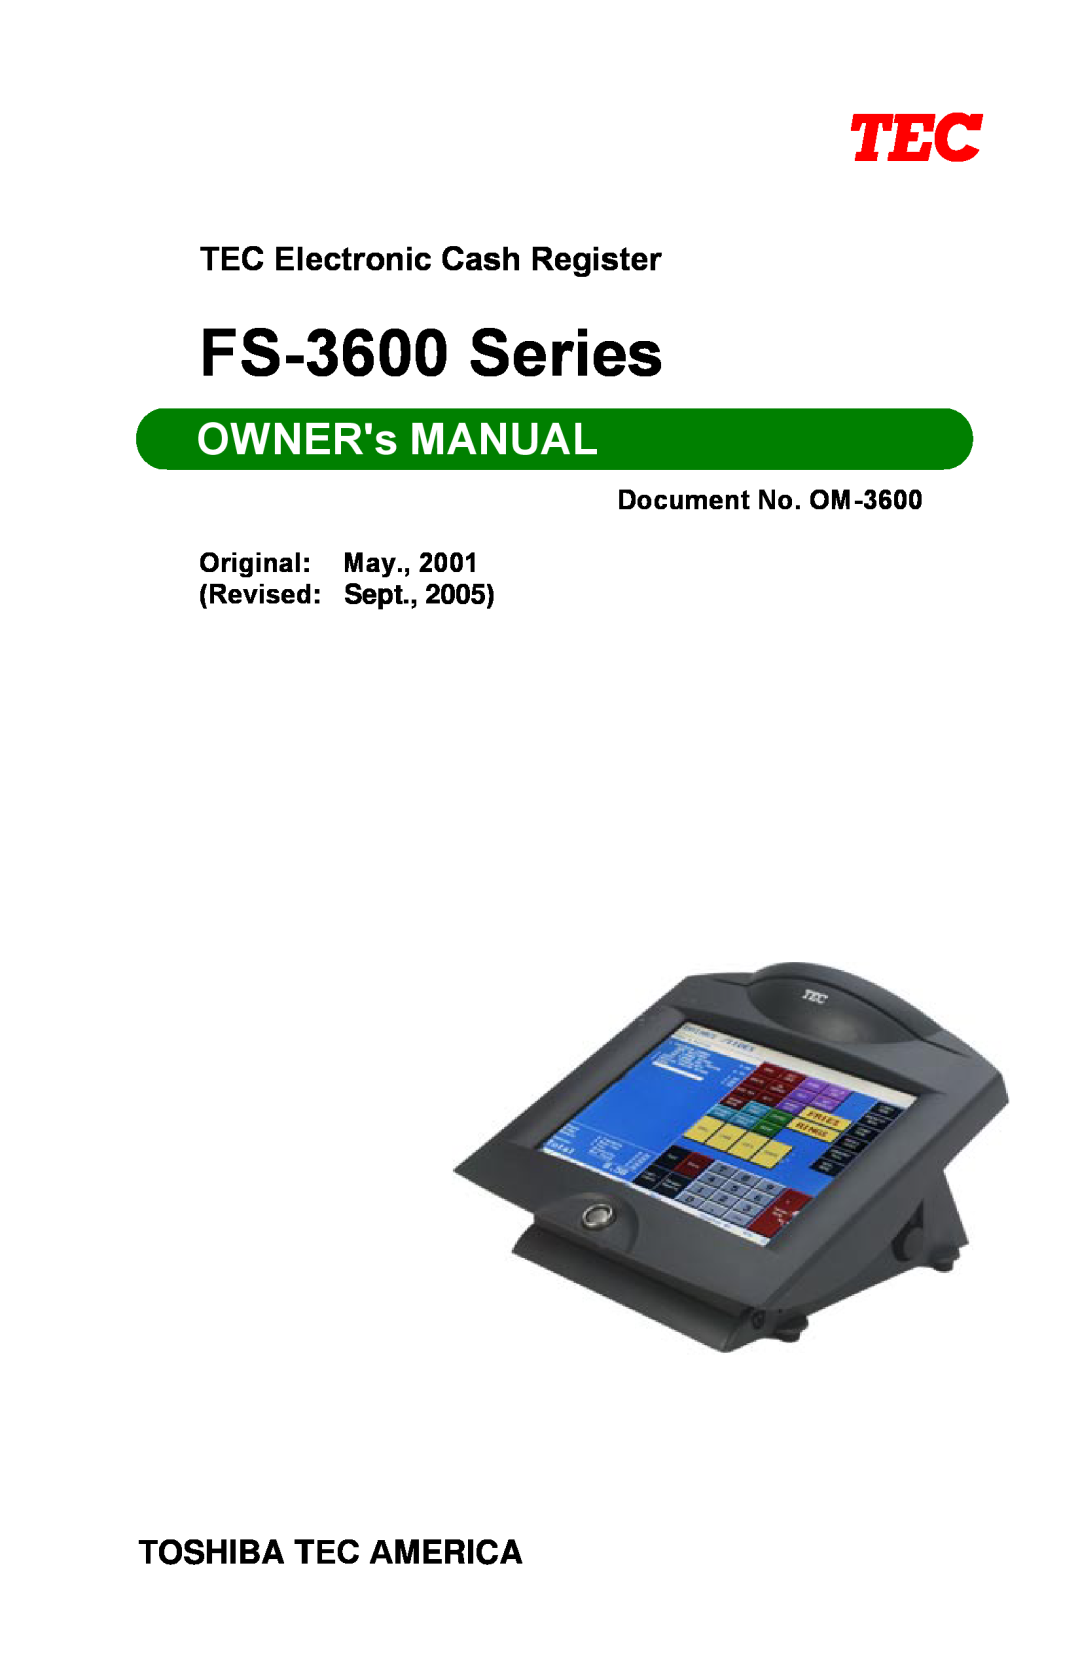 Toshiba FS-3600 owner manual TEC Electronic Cash Register, Toshiba Tec America, Document No. OM-3600 Original: May 